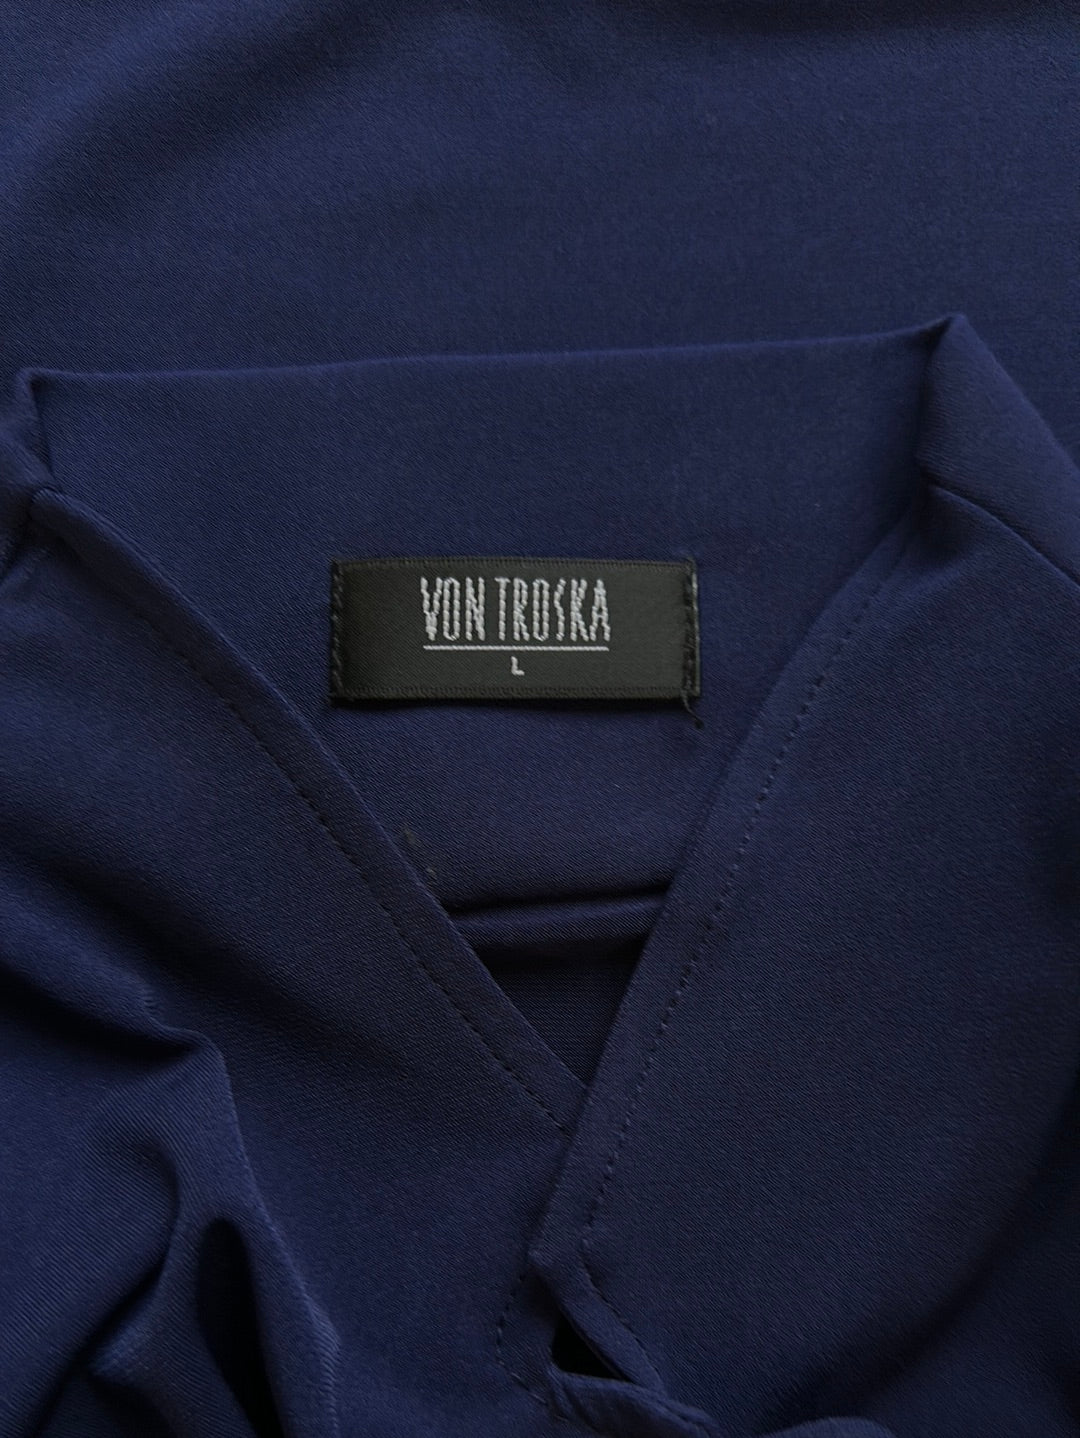 Von Troska | vintage 90's | top | size 12 | long sleeve | made in Australia